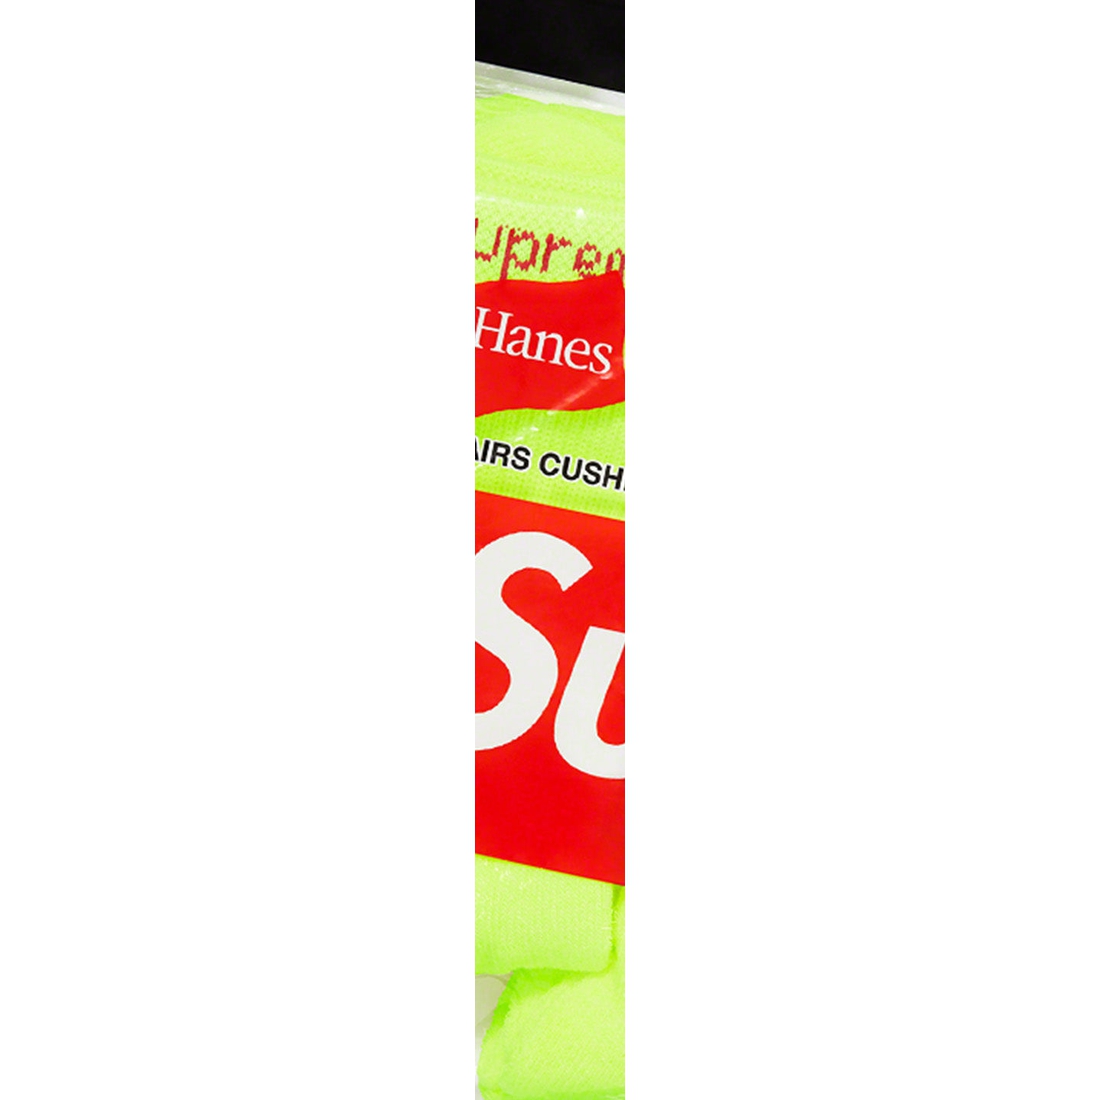 Supreme Hanes Socks (4 Pack) Red